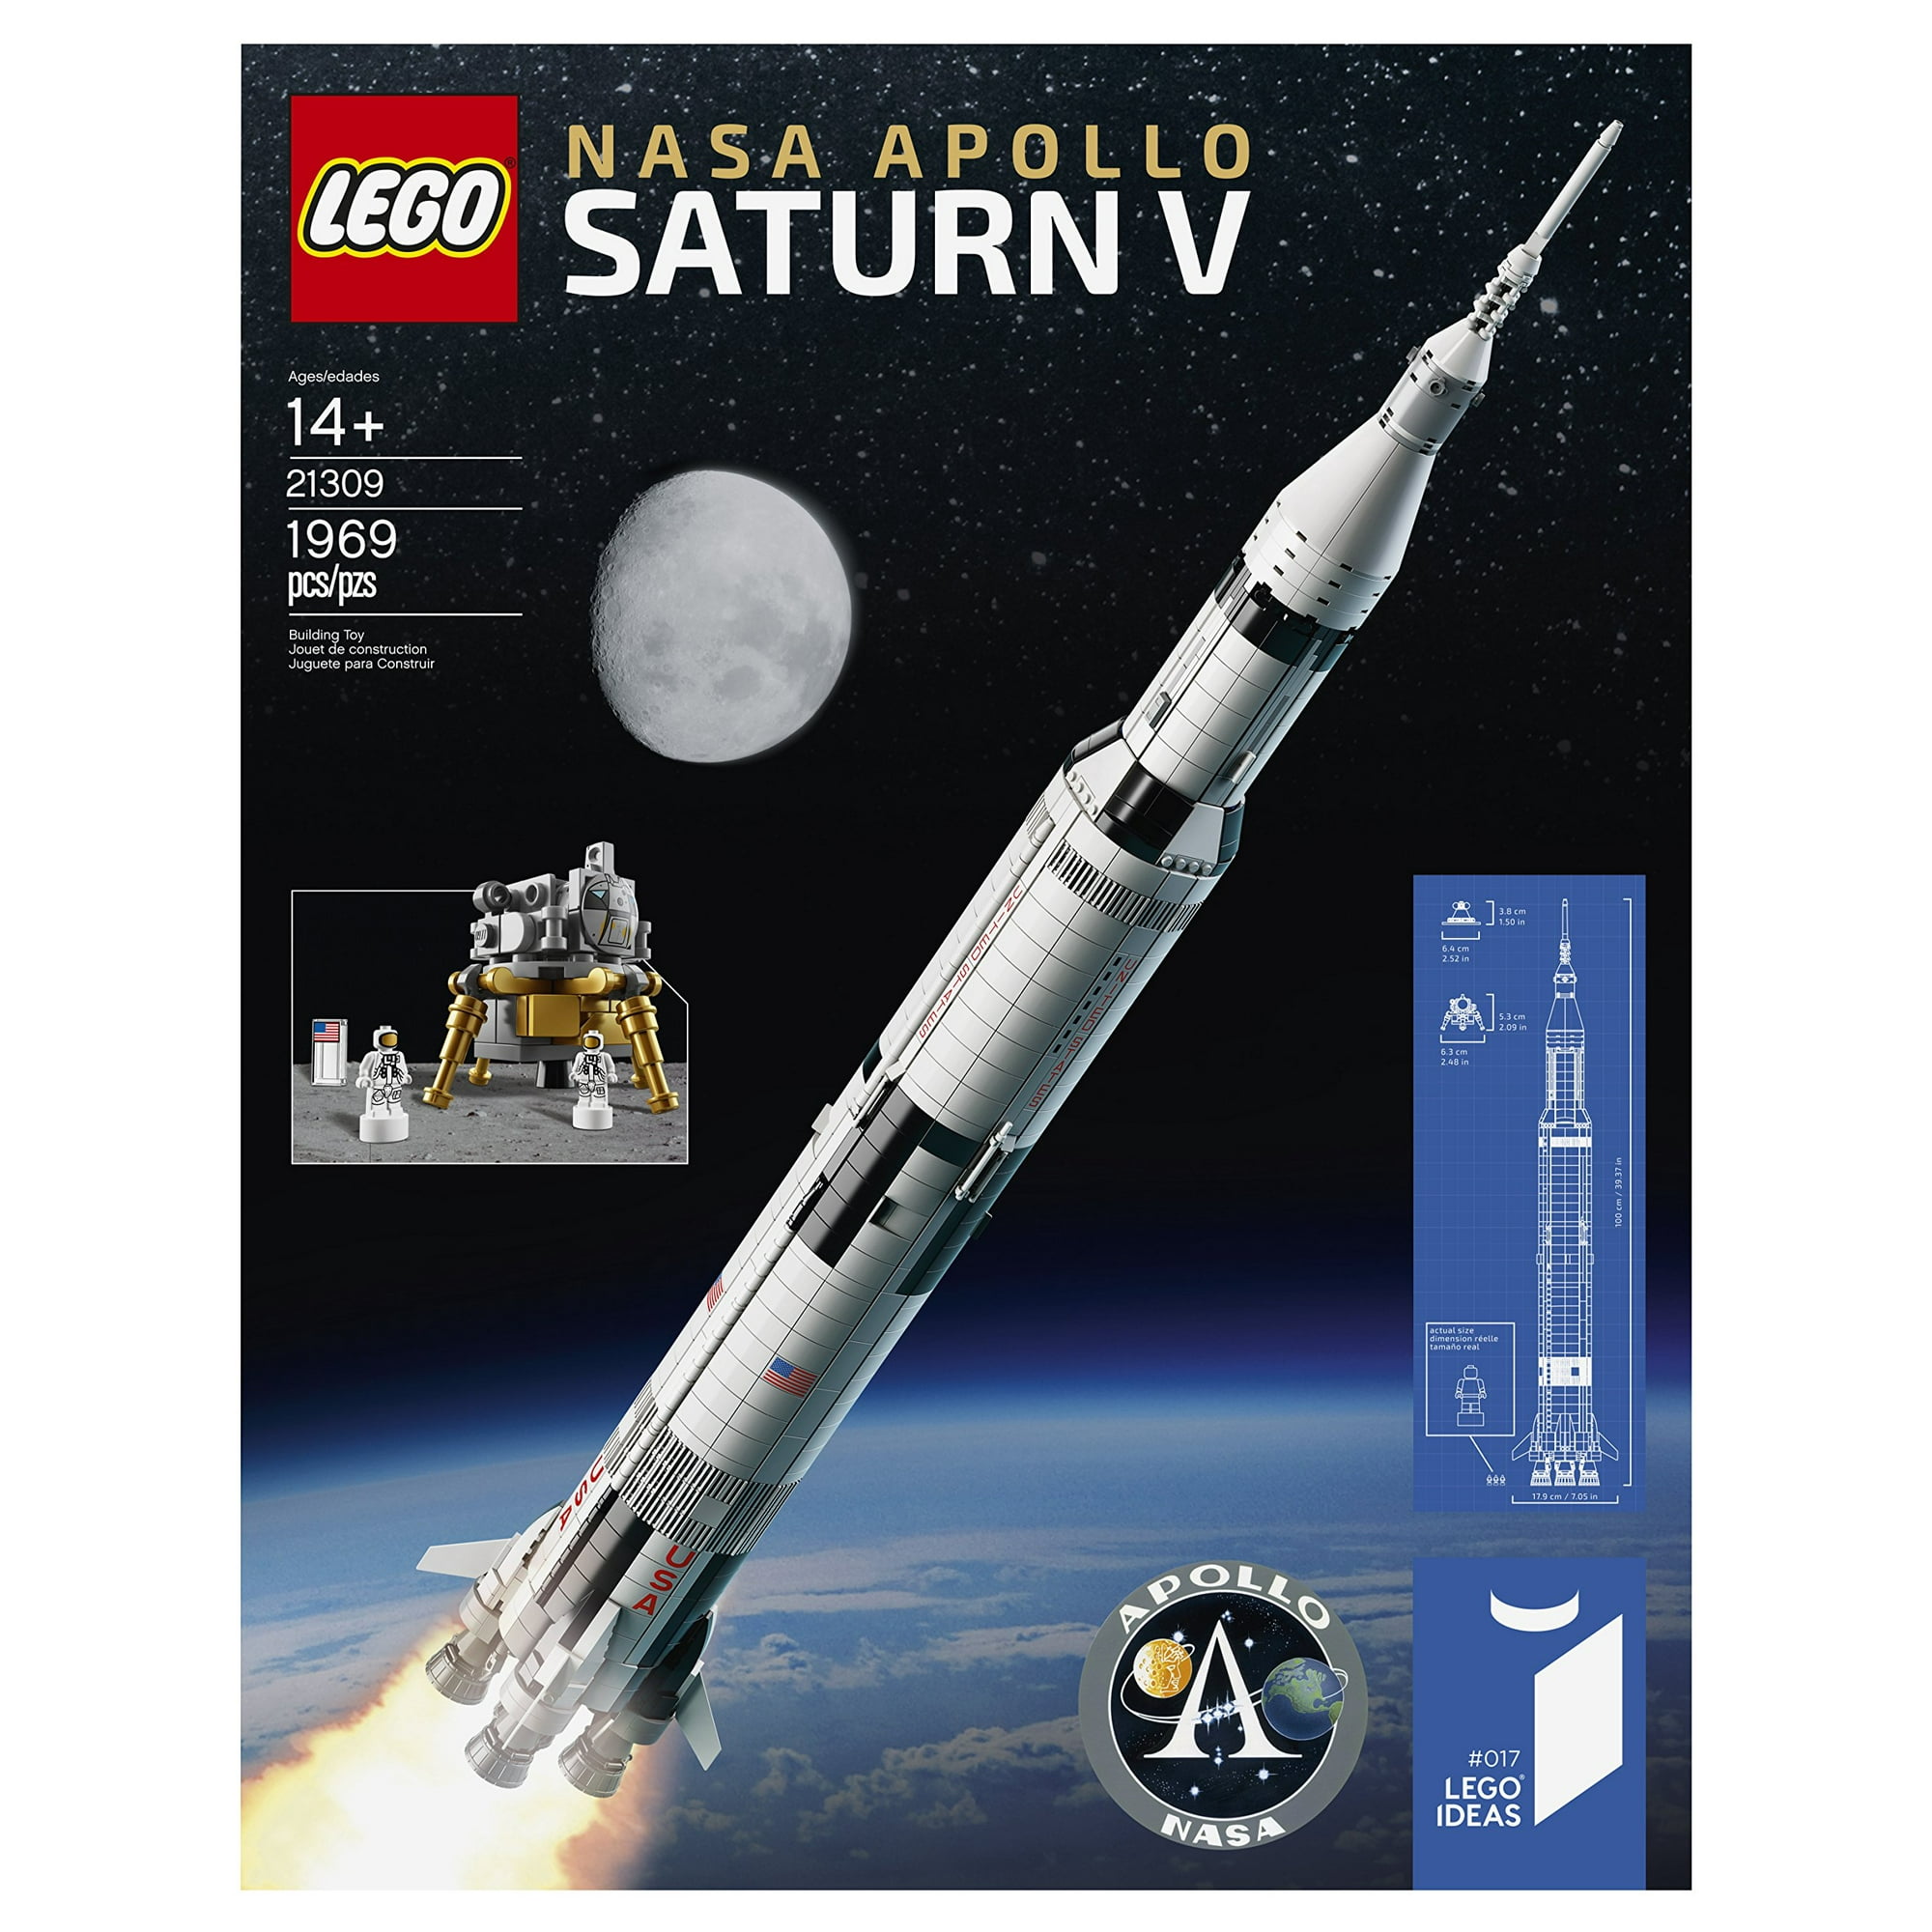 Lego Ideas Apollo Saturn V 21309 Building Kit (1969 Piece) Walmart Canada